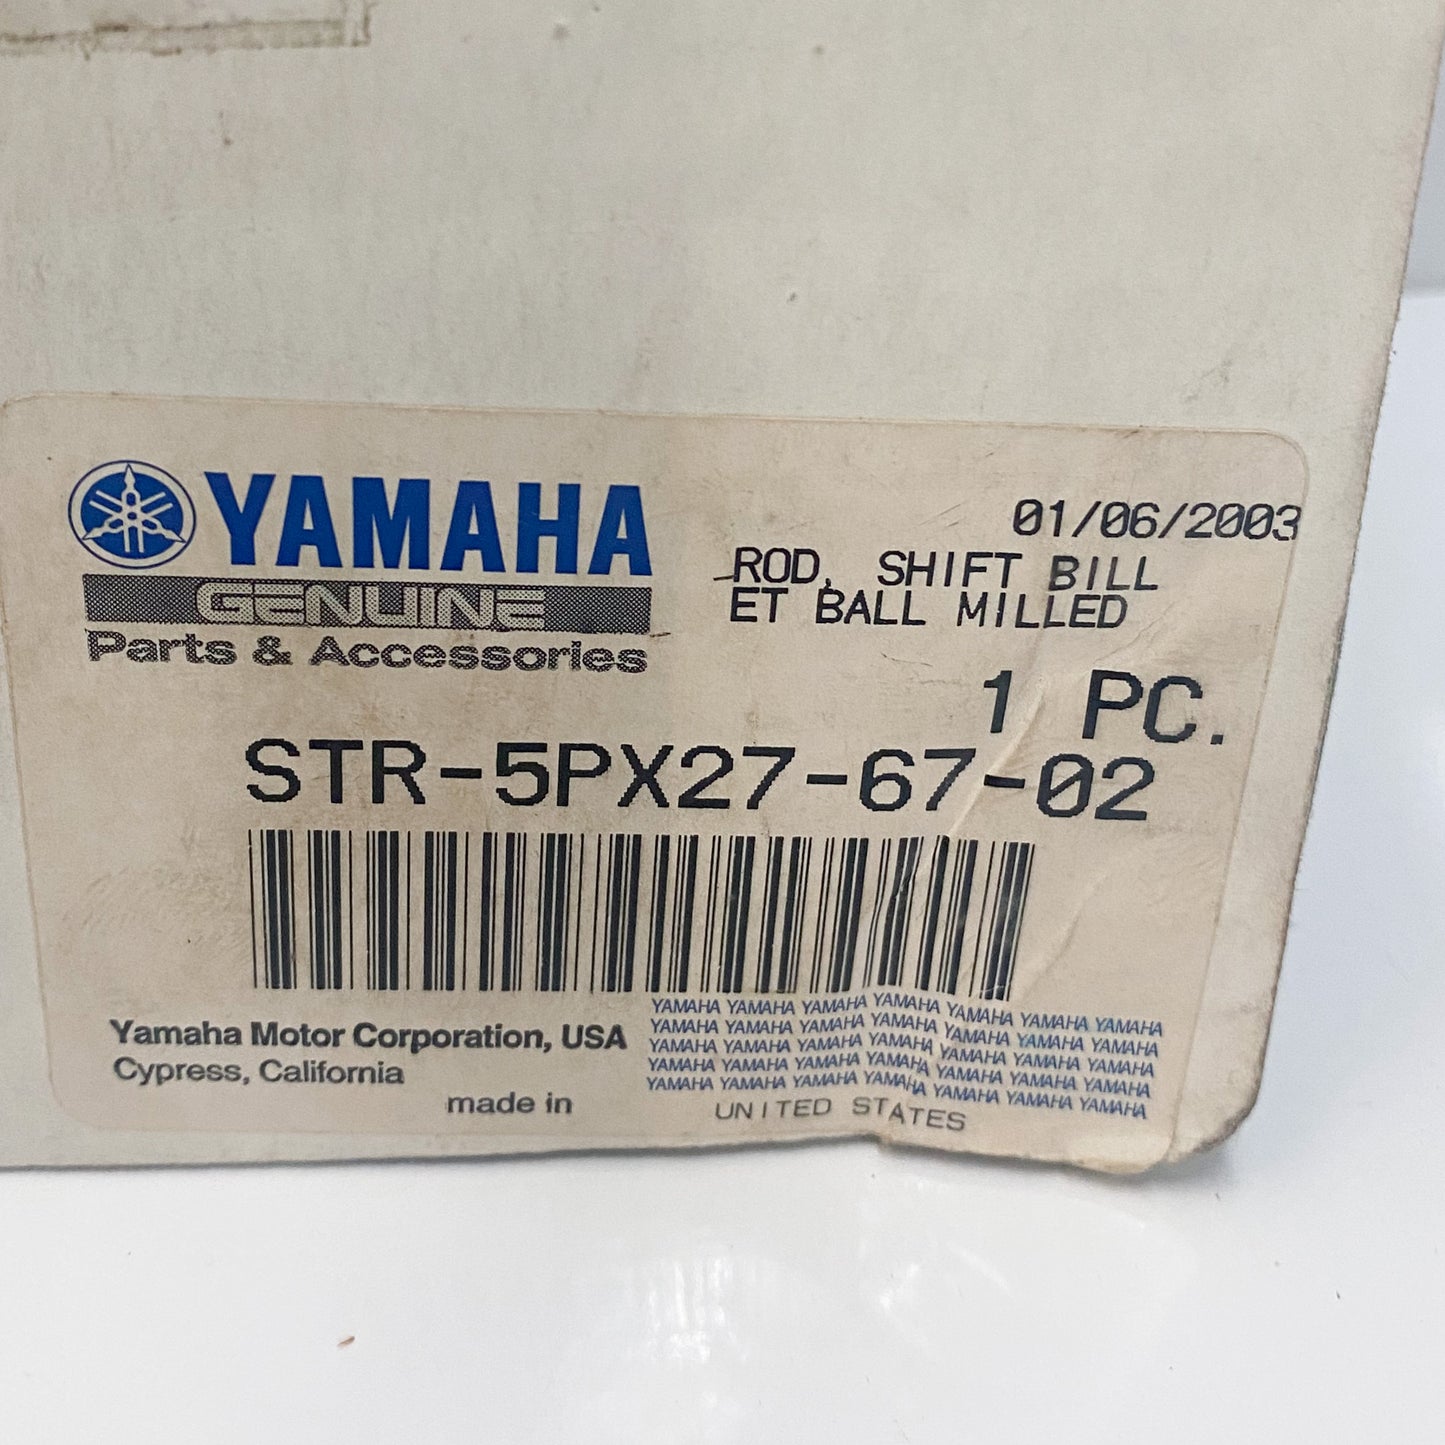 Yamaha Billet Shift Rod Ball Milled, Road Star STR-5PX27-67-02